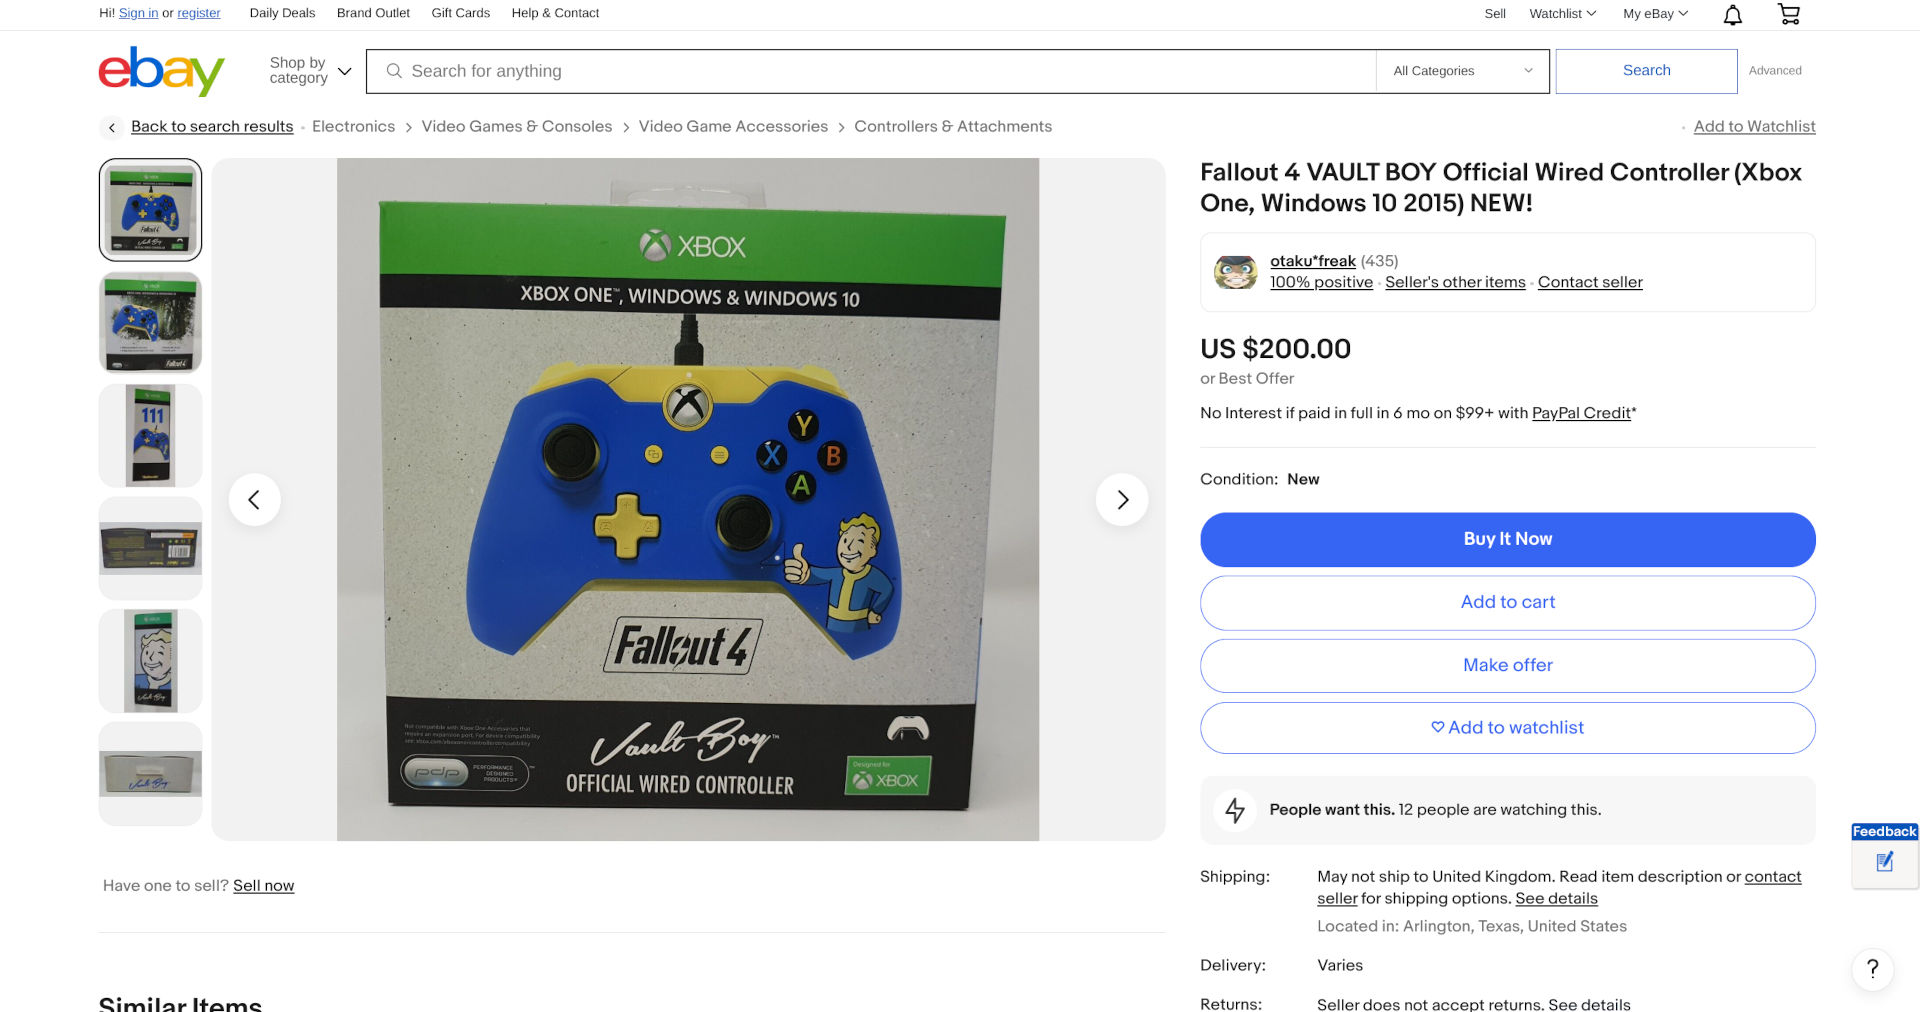 Un listado de eBay para el controlador Fallout 4 Vault Boy